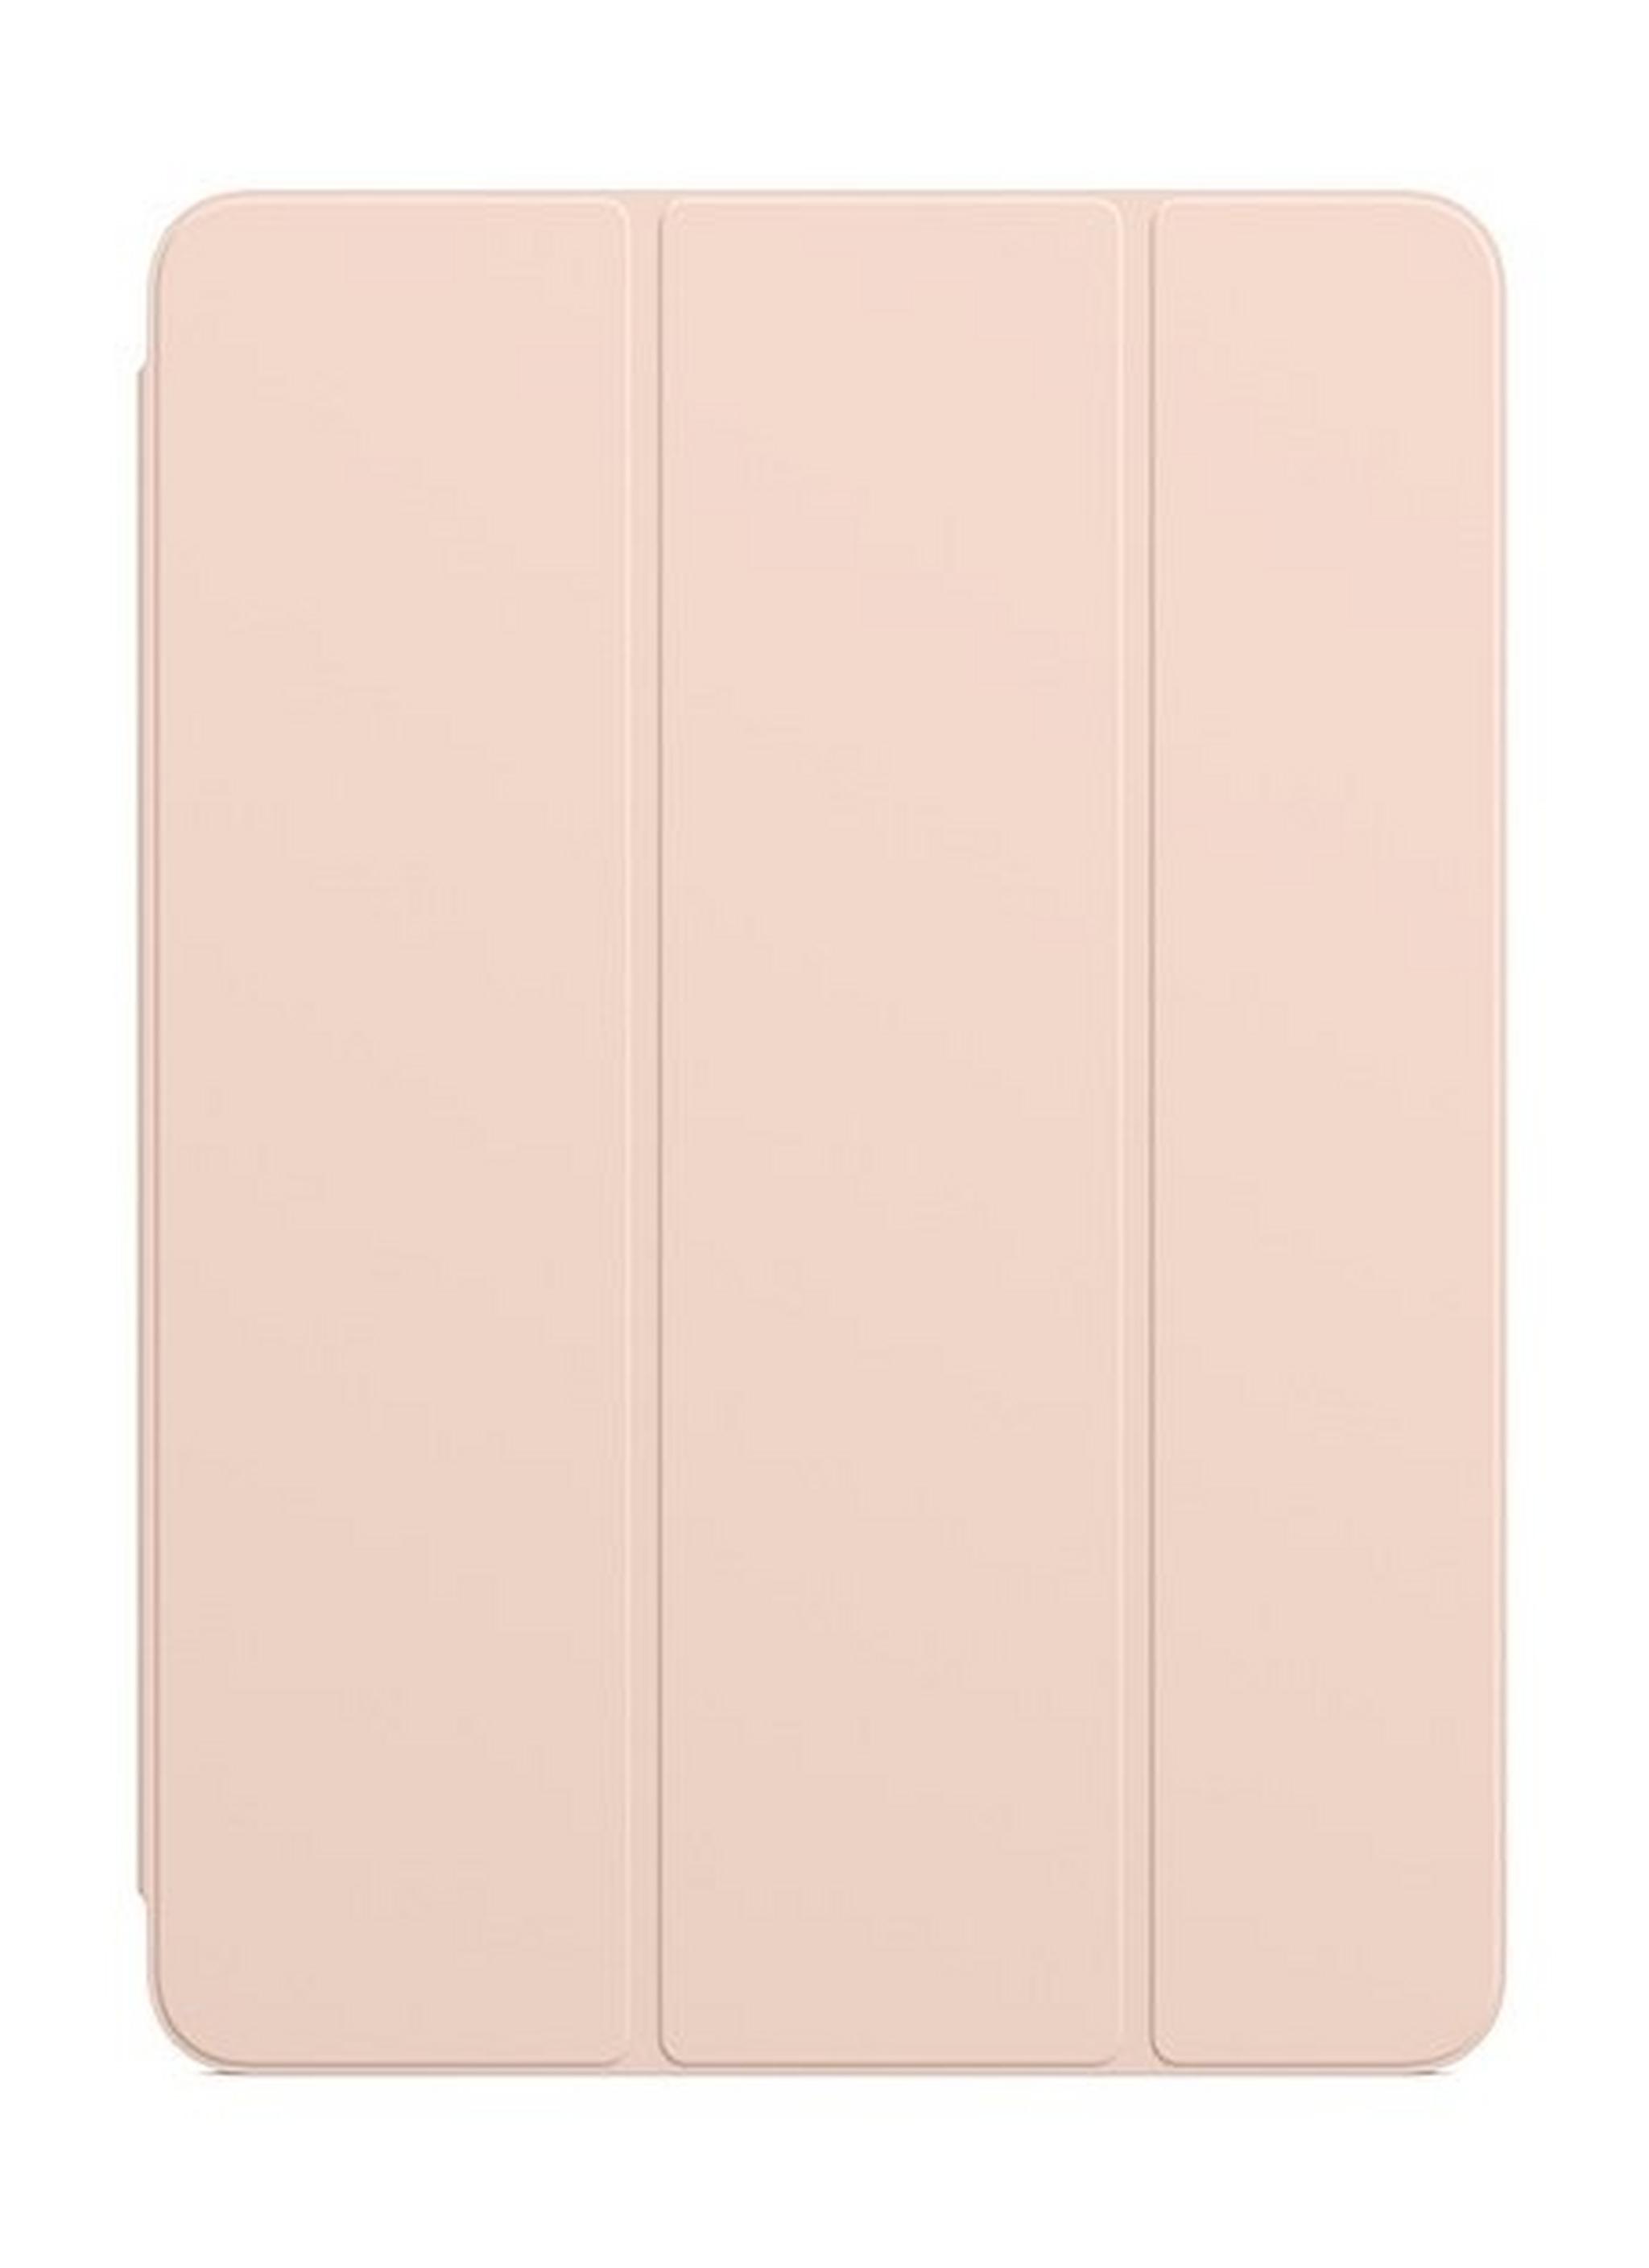 Apple Smart Folio for 11-inch iPad Pro (MRX92ZM/A) - Pink